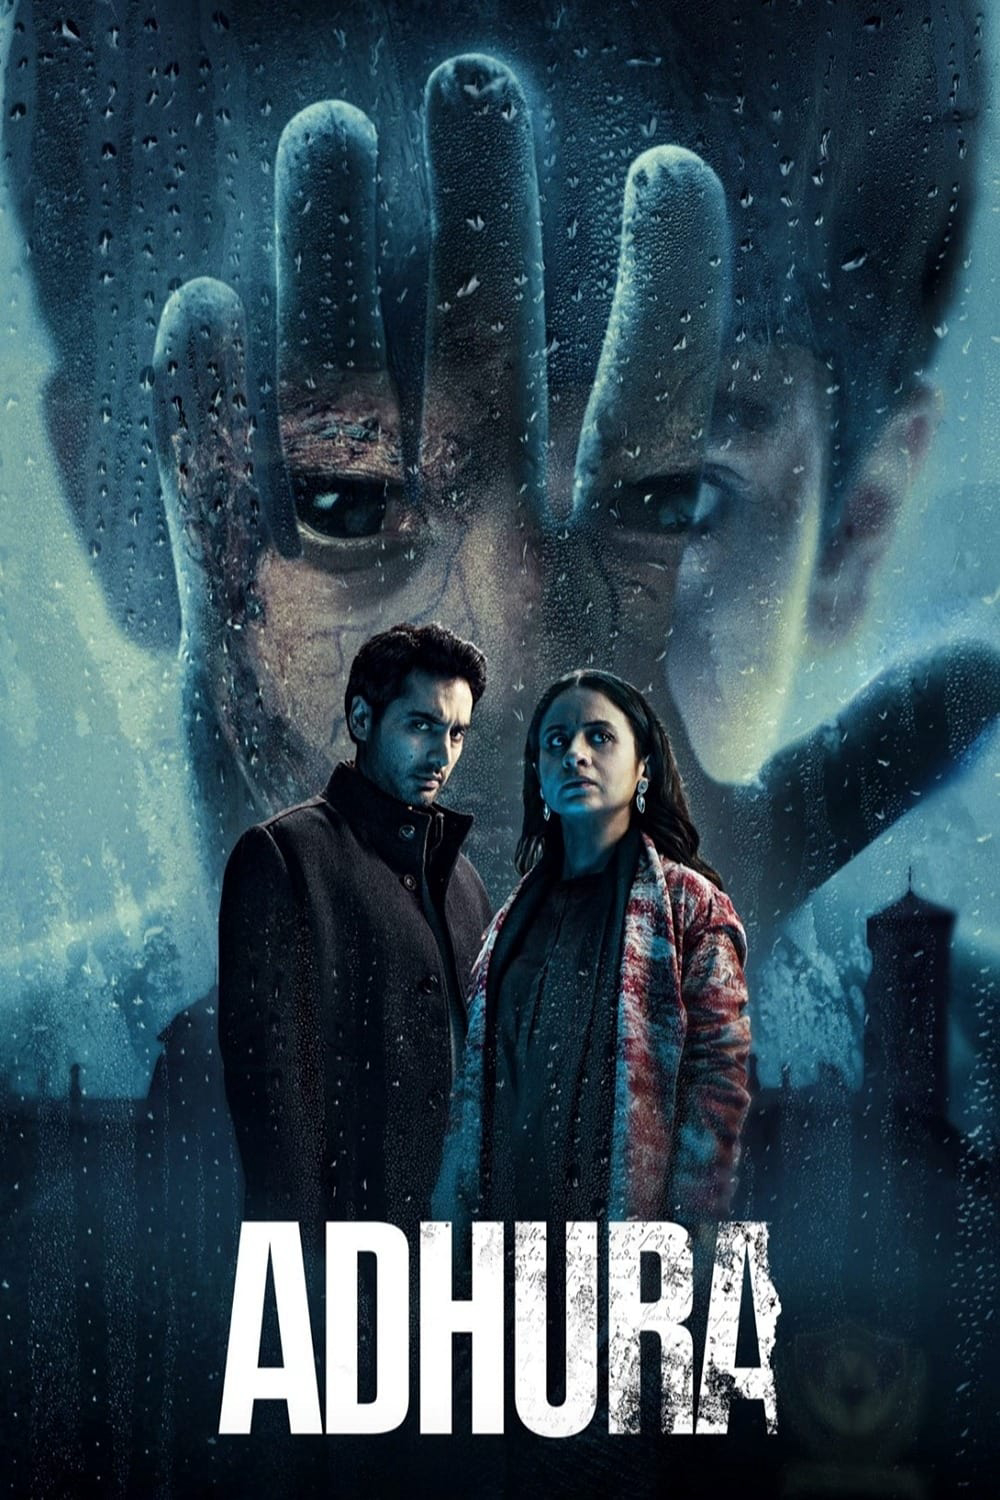 Poster Phim Adhura (Adhura)